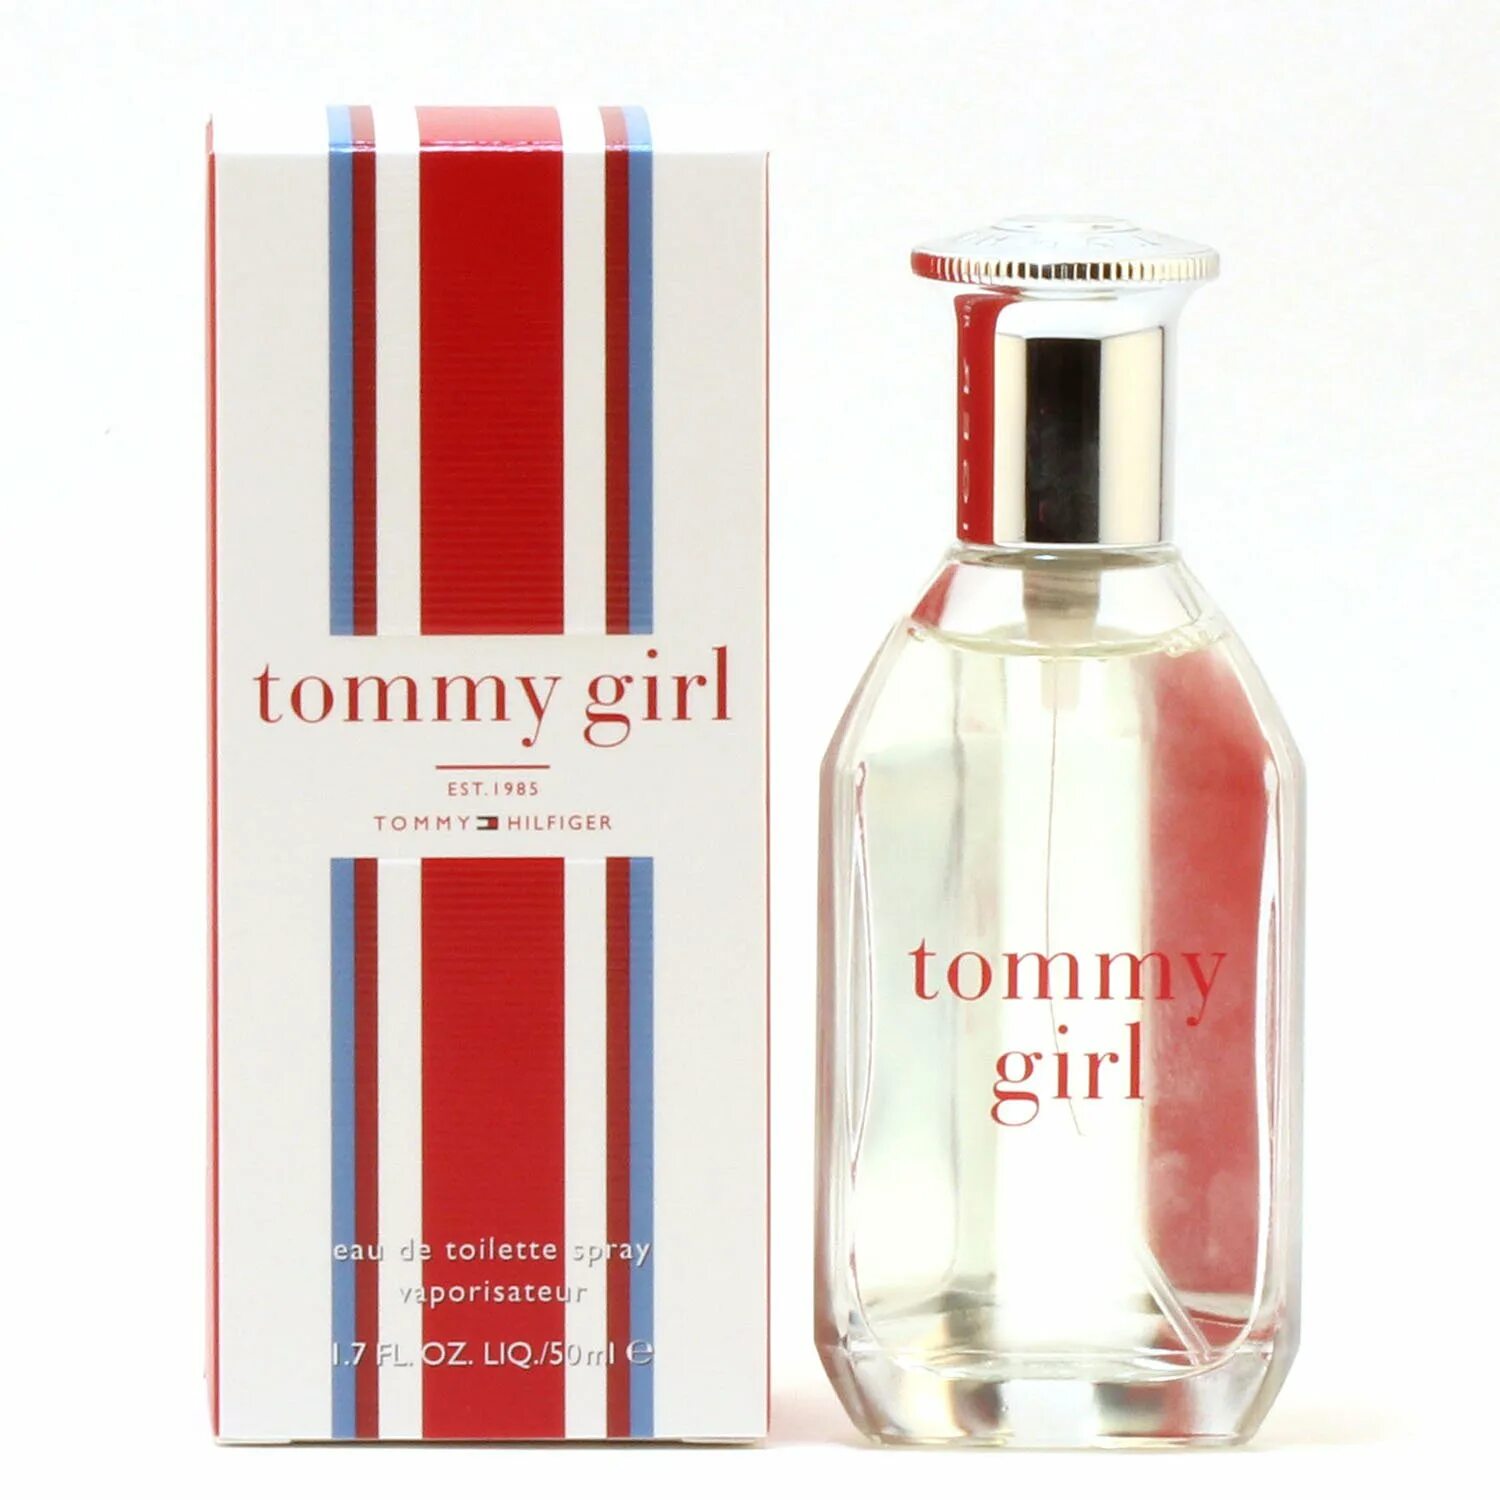 Tommy Hilfiger Tommy Eau de Toilette. Tommy Hilfiger girl Summer Eau de Toilette. Tommy Hilfiger the girl EDT 30ml.